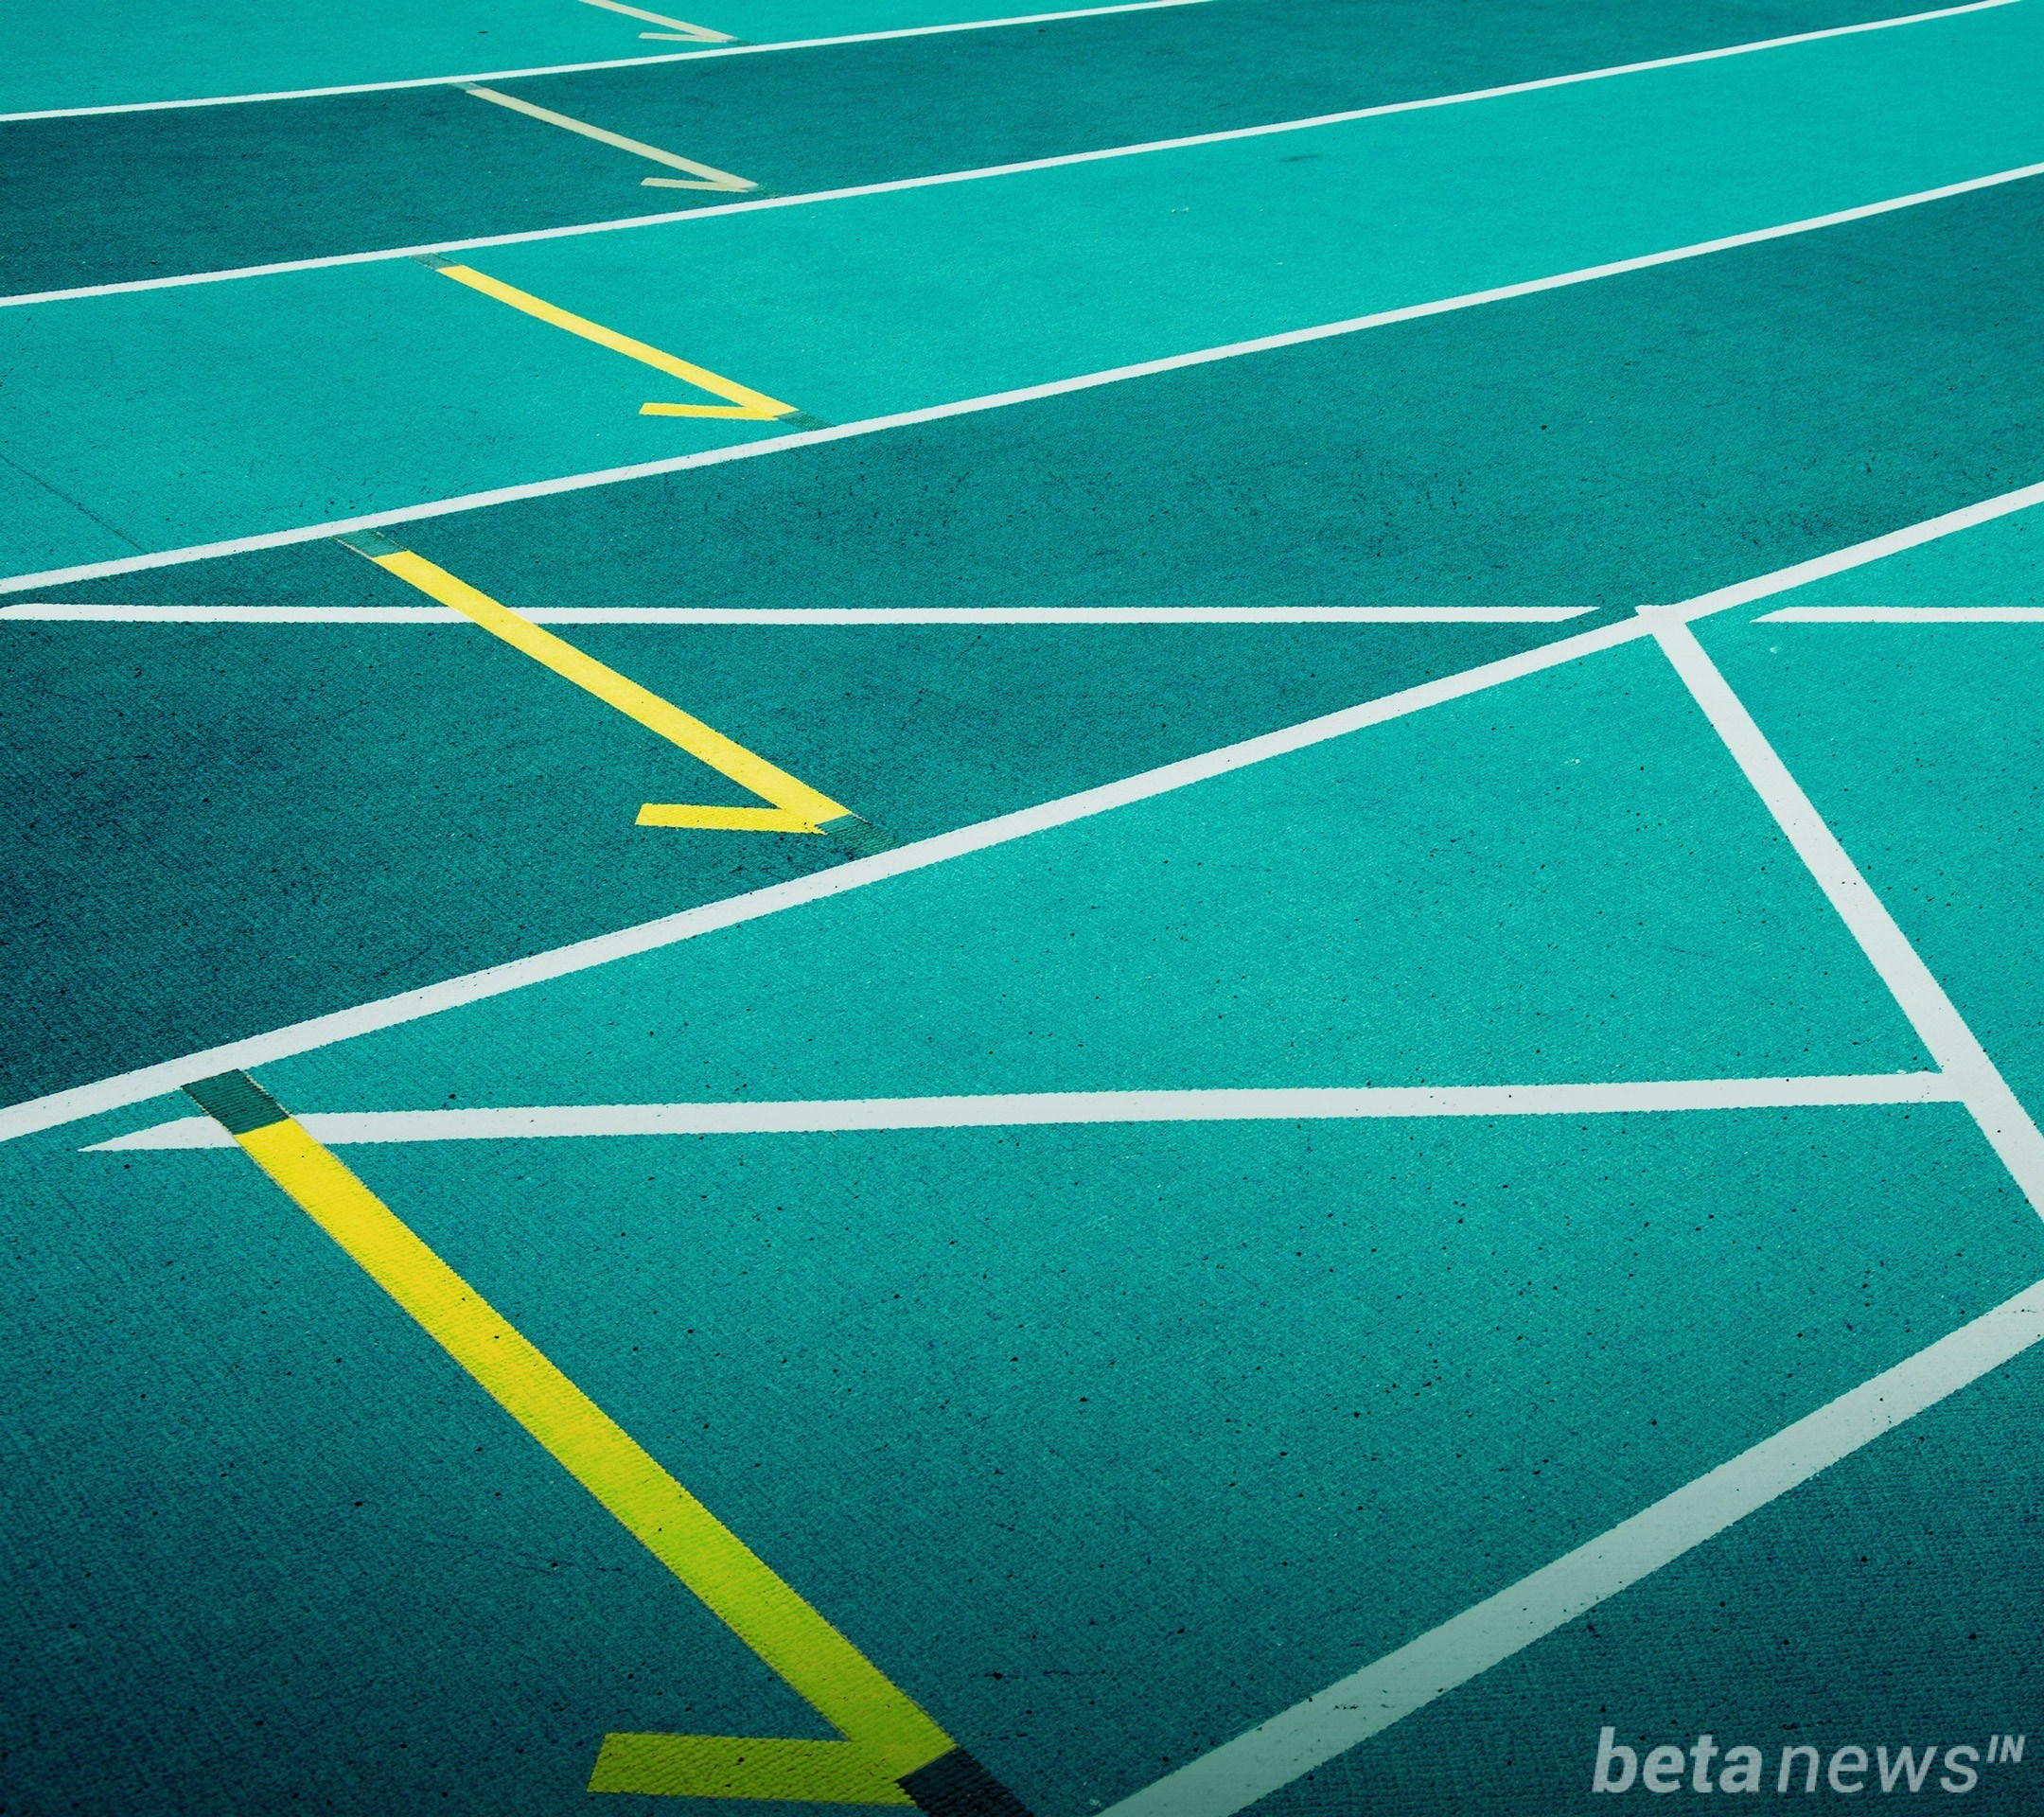 carta da parati stile moto x,verde,linea,parallelo,campo da tennis,pavimento